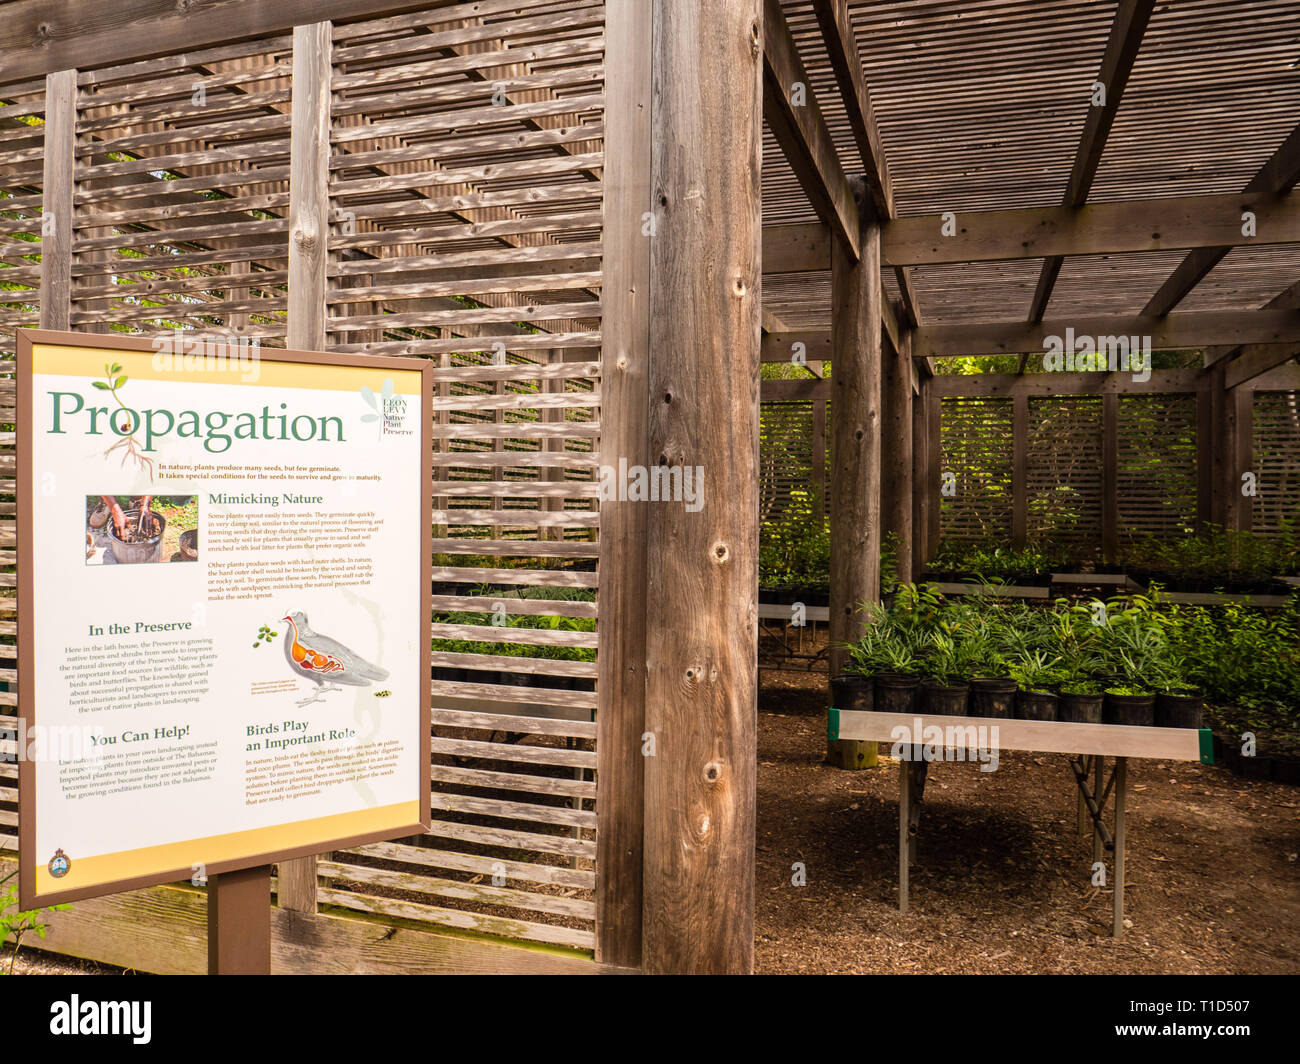 Propagation Shed, Leon Levy Native Plant Preserve, Bahamas National Park, Governors Harbour, Eleuthera, The Bahamas, Caribbean. Stock Photo